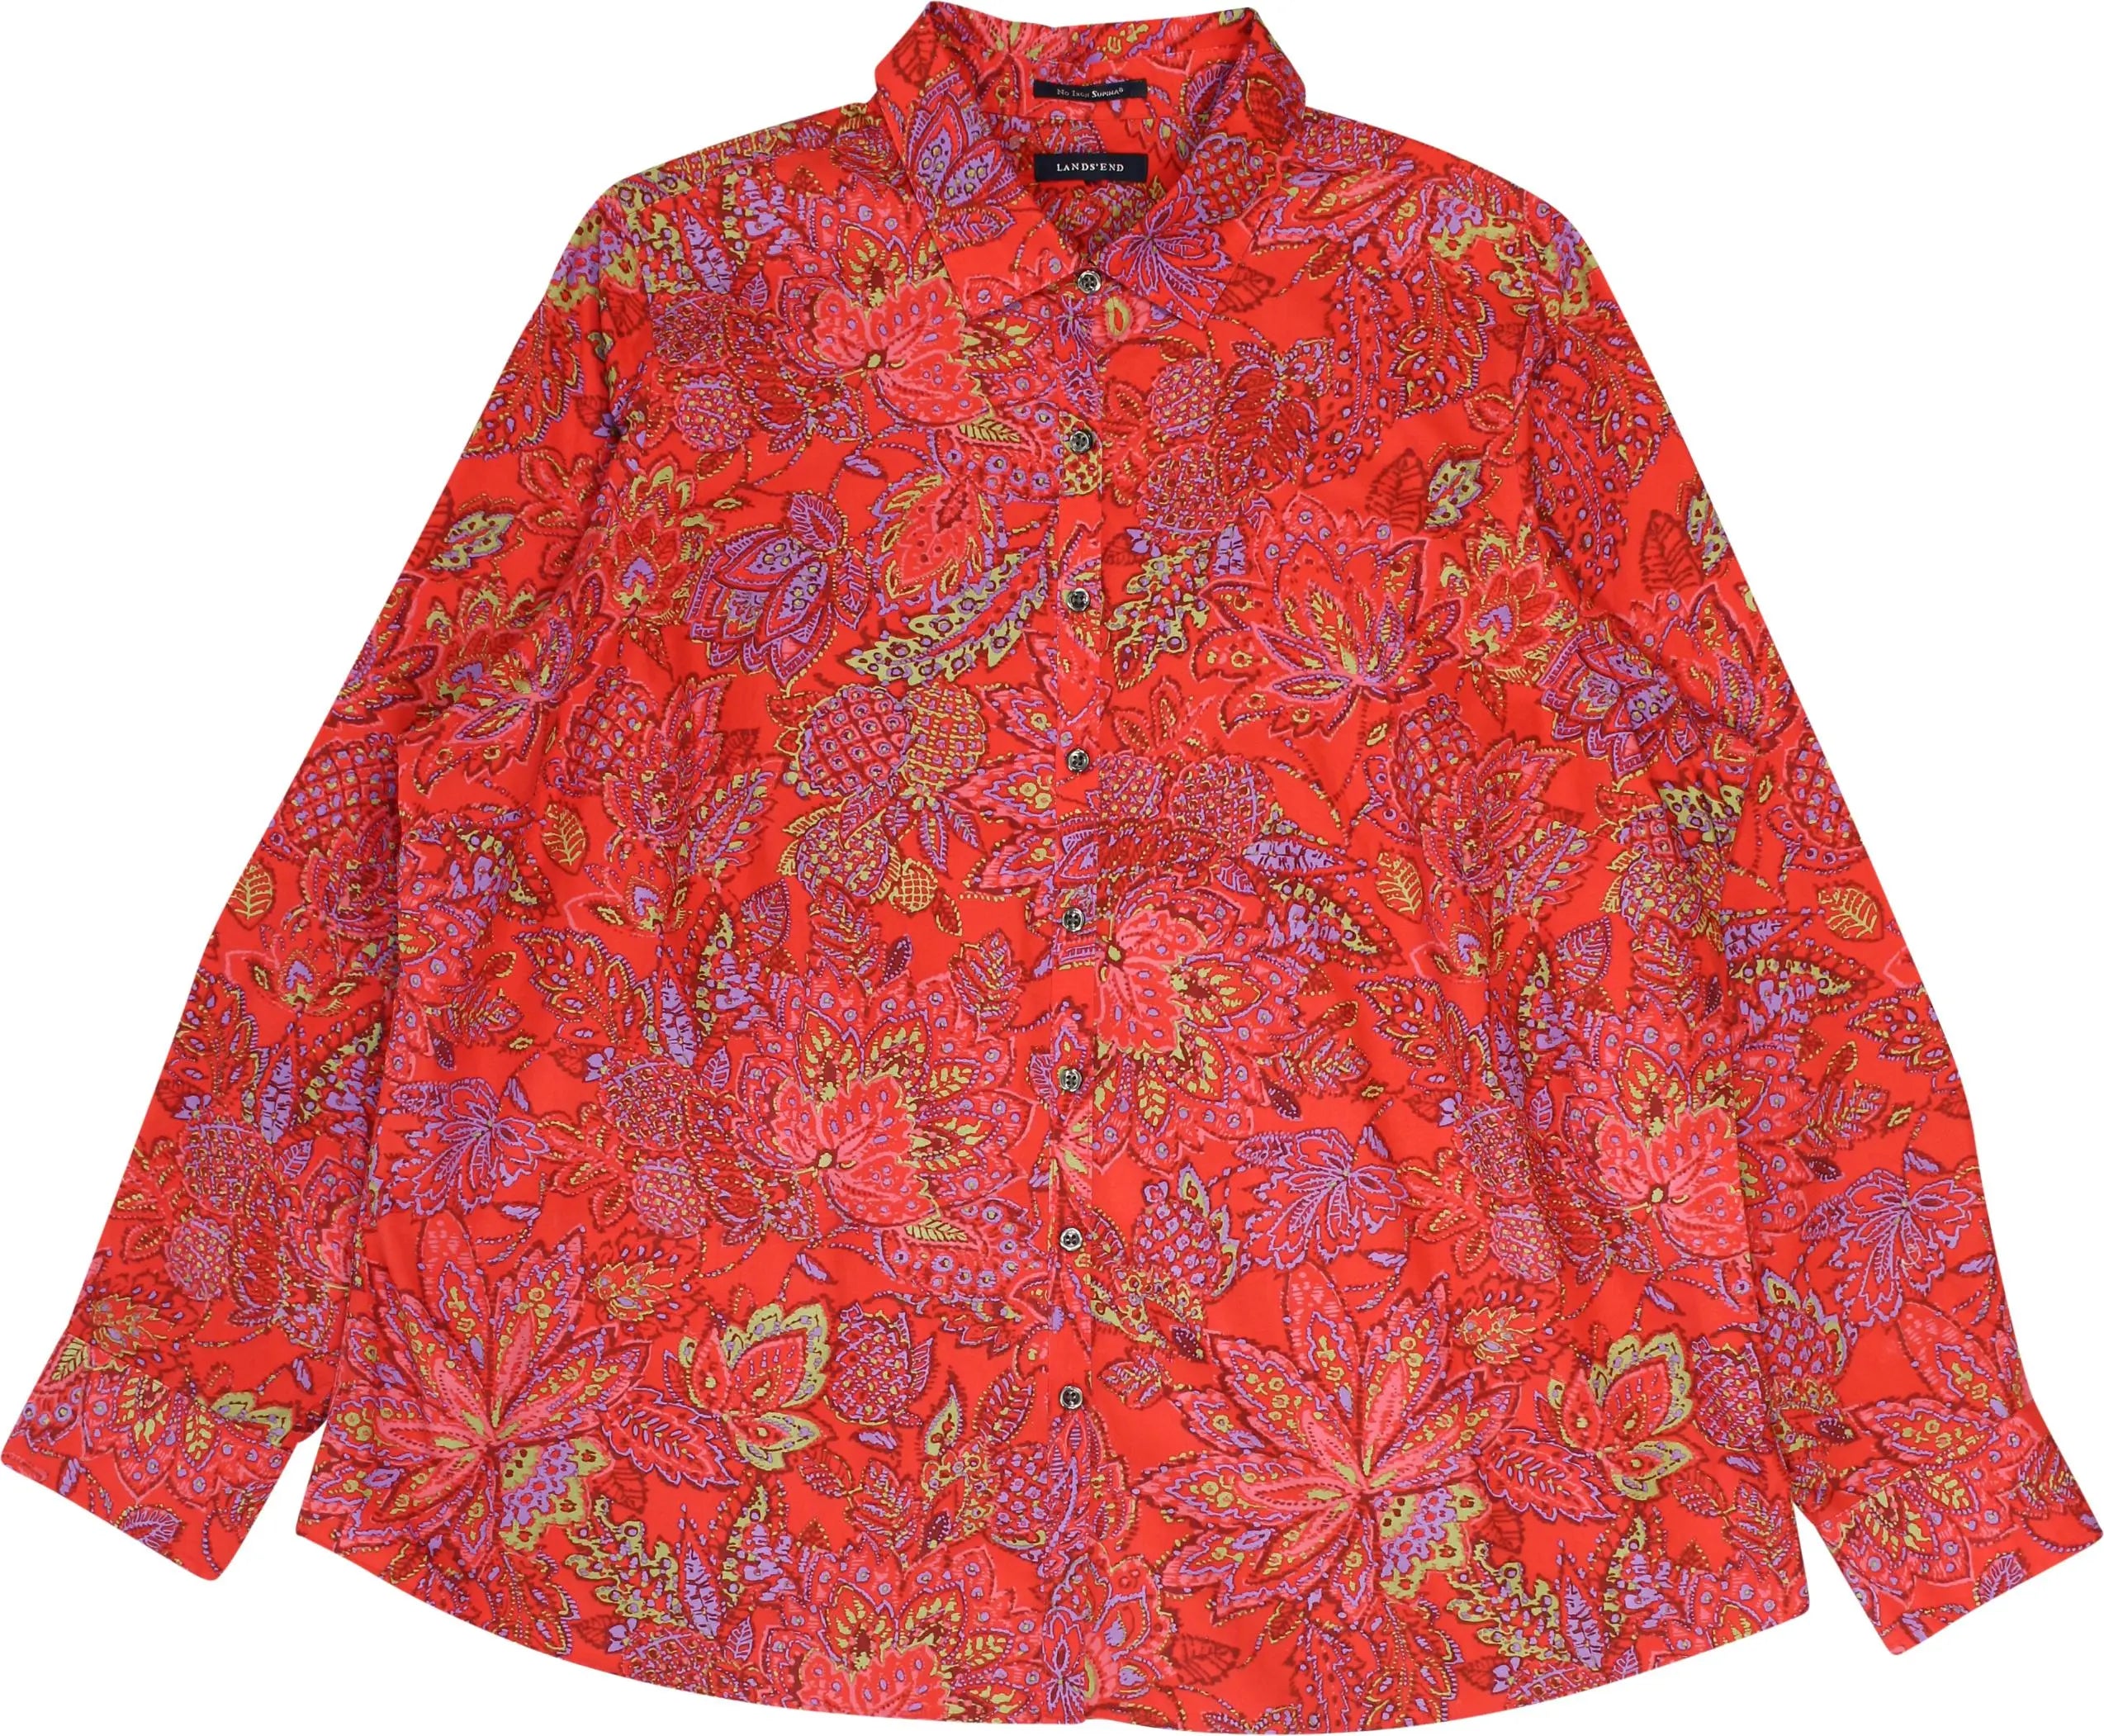 Lands'end - Patterned Shirt- ThriftTale.com - Vintage and second handclothing